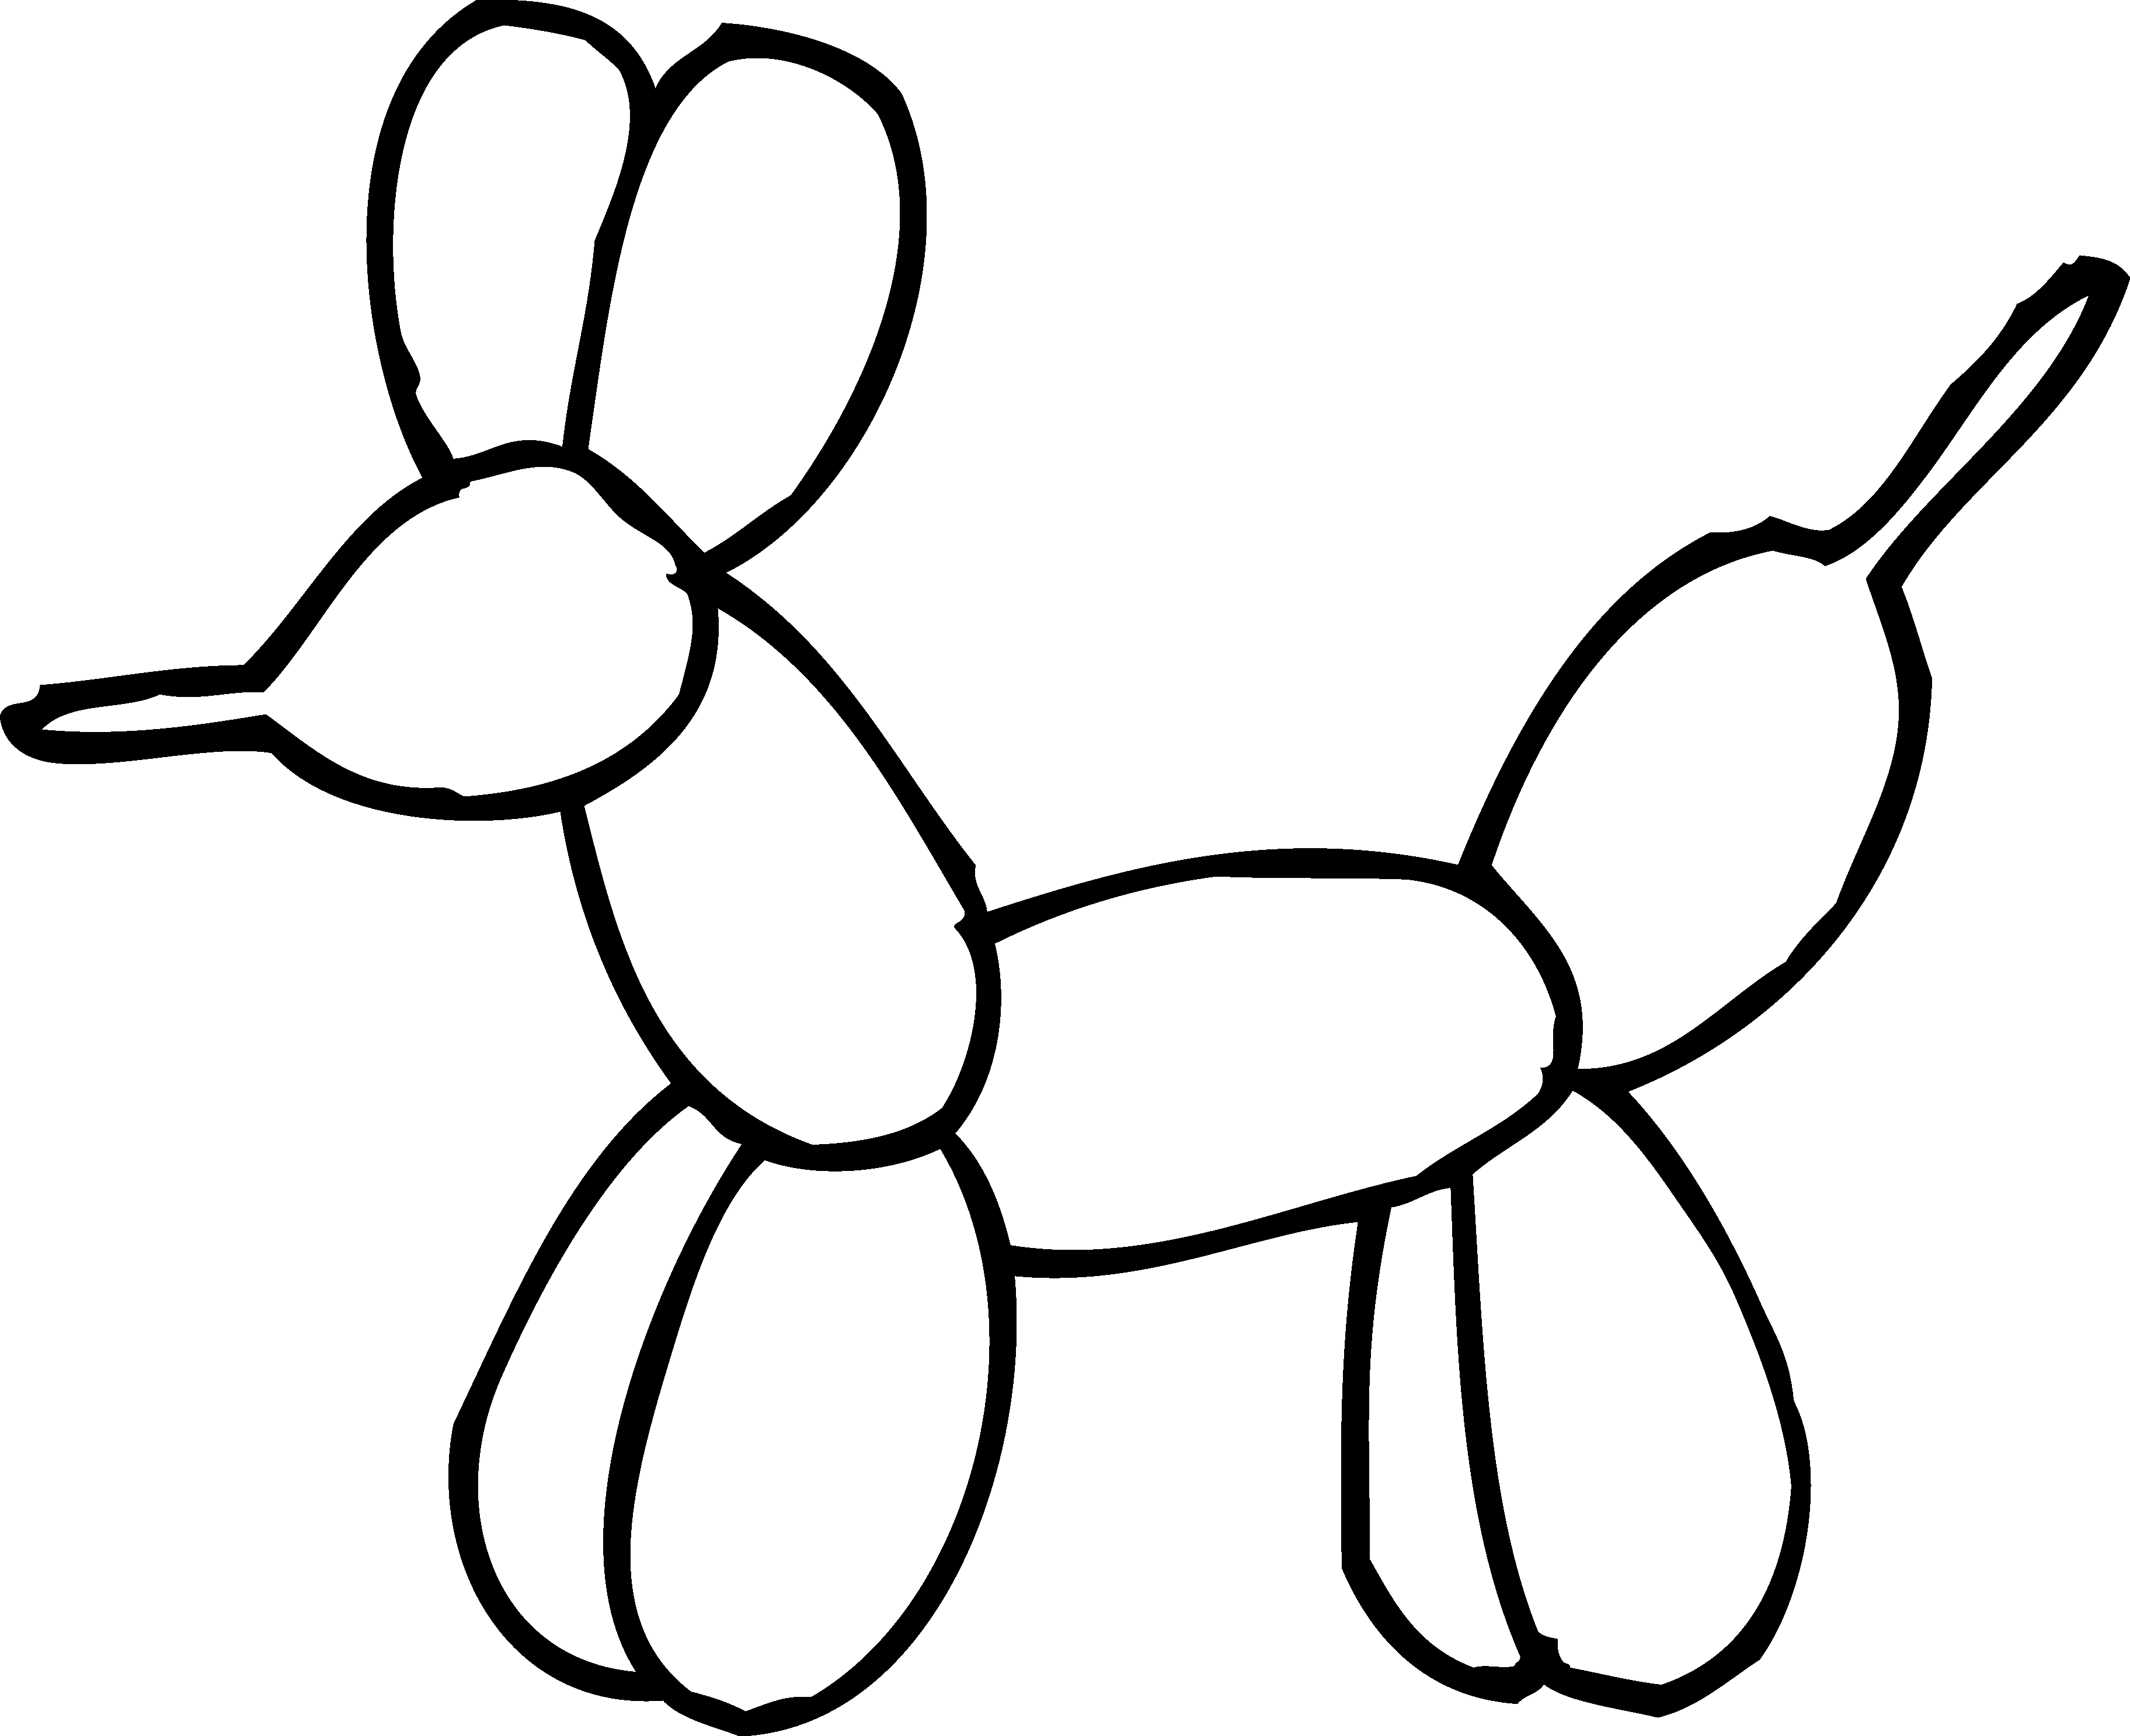 Animal rabbit one line art logo design Royalty Free Vector